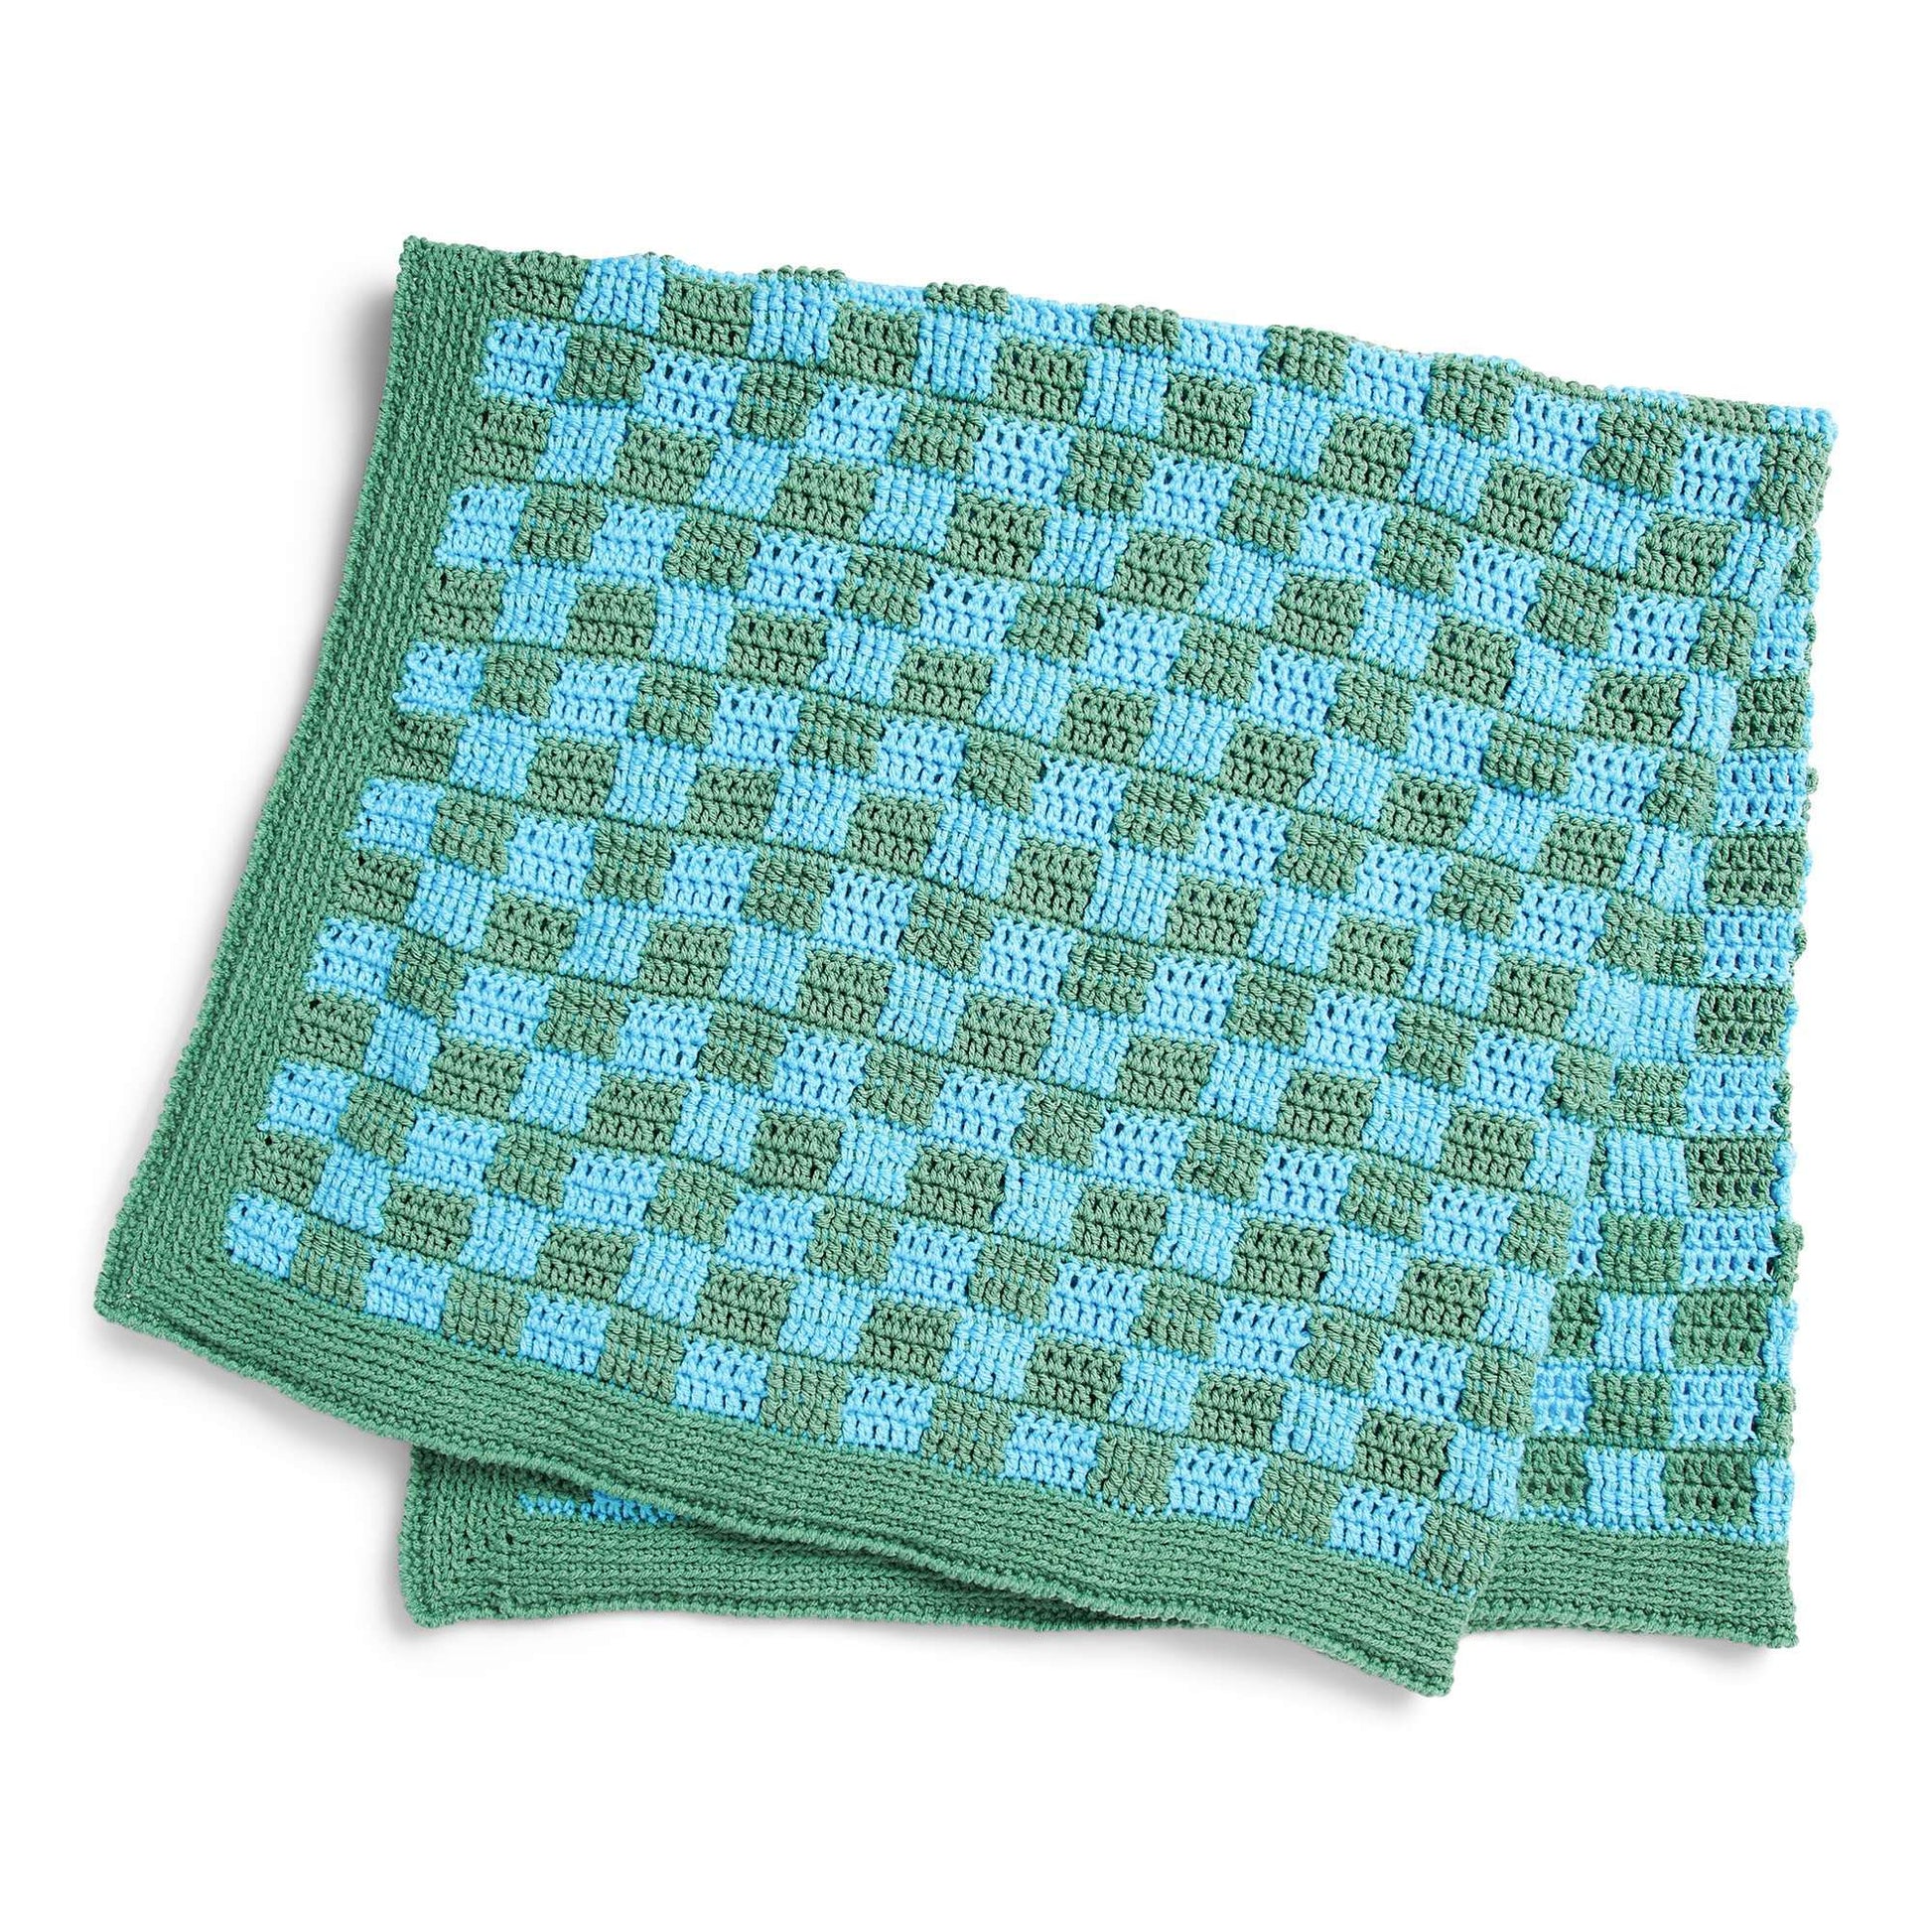 Free Caron Crochet Waterfall Stitch Blanket Pattern